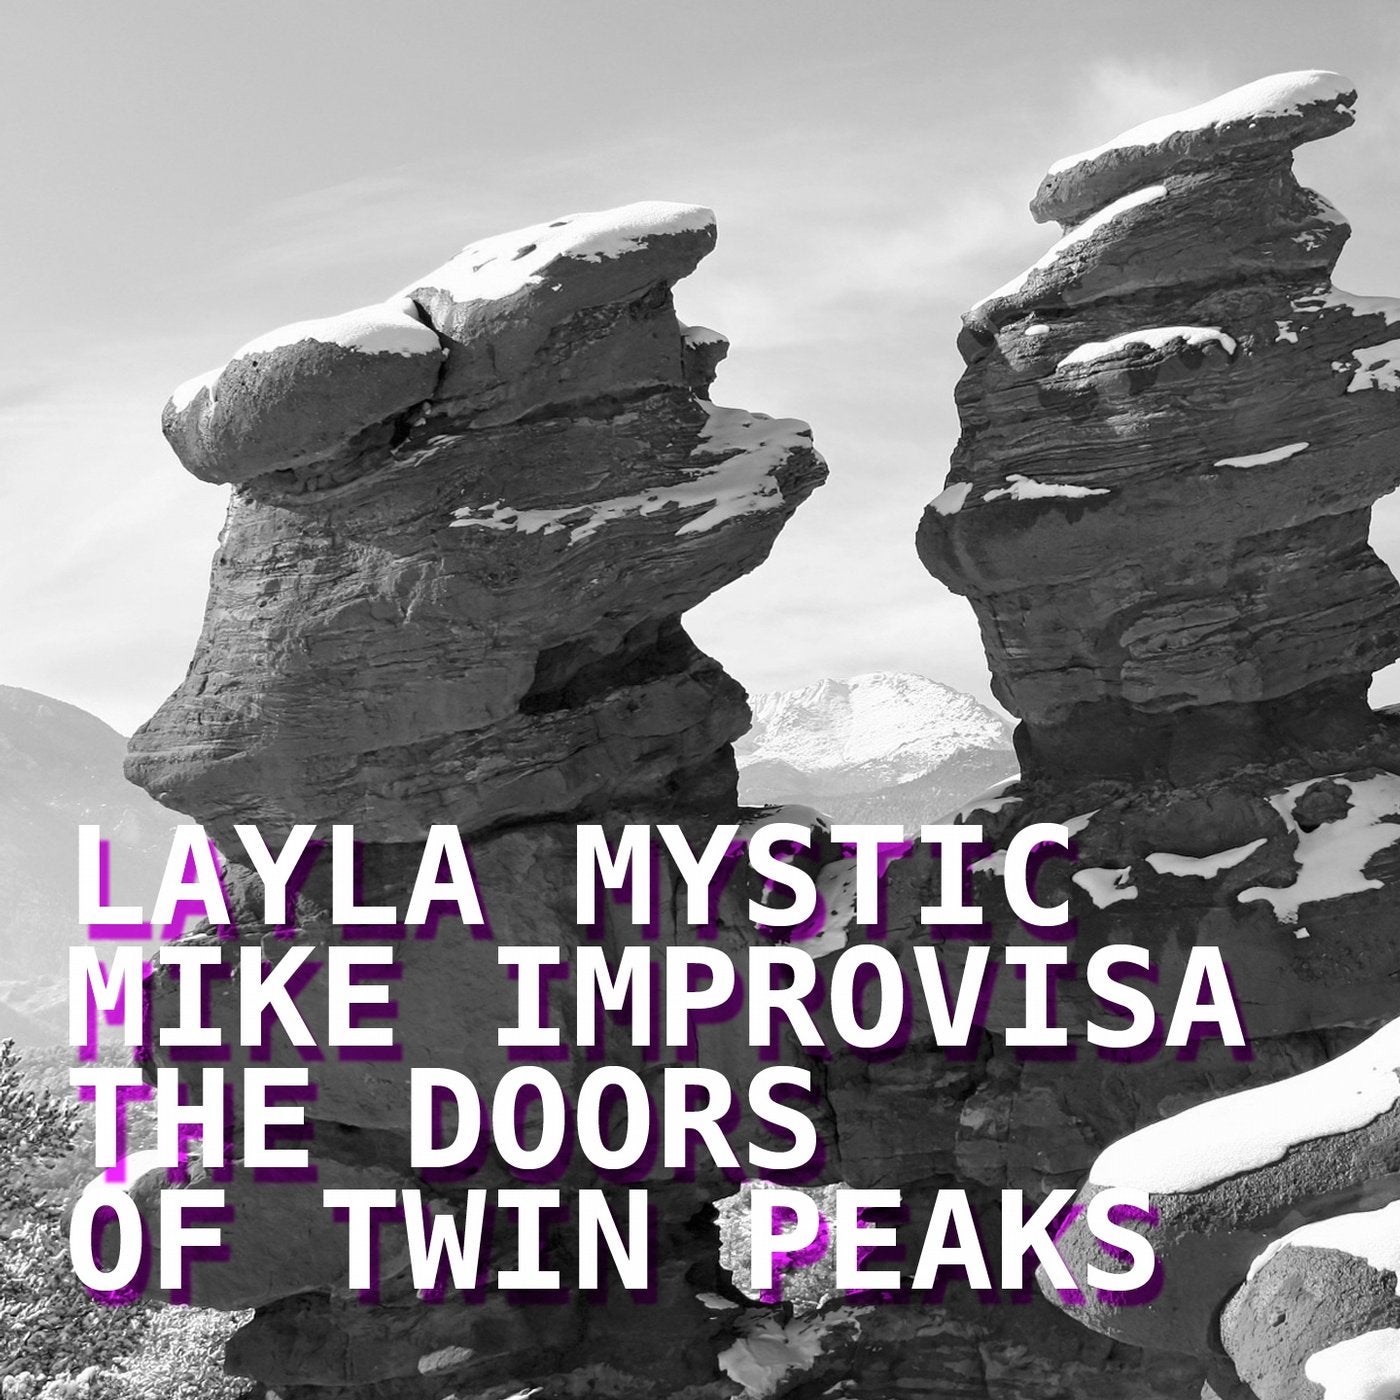 The Doors of Twin Peaks